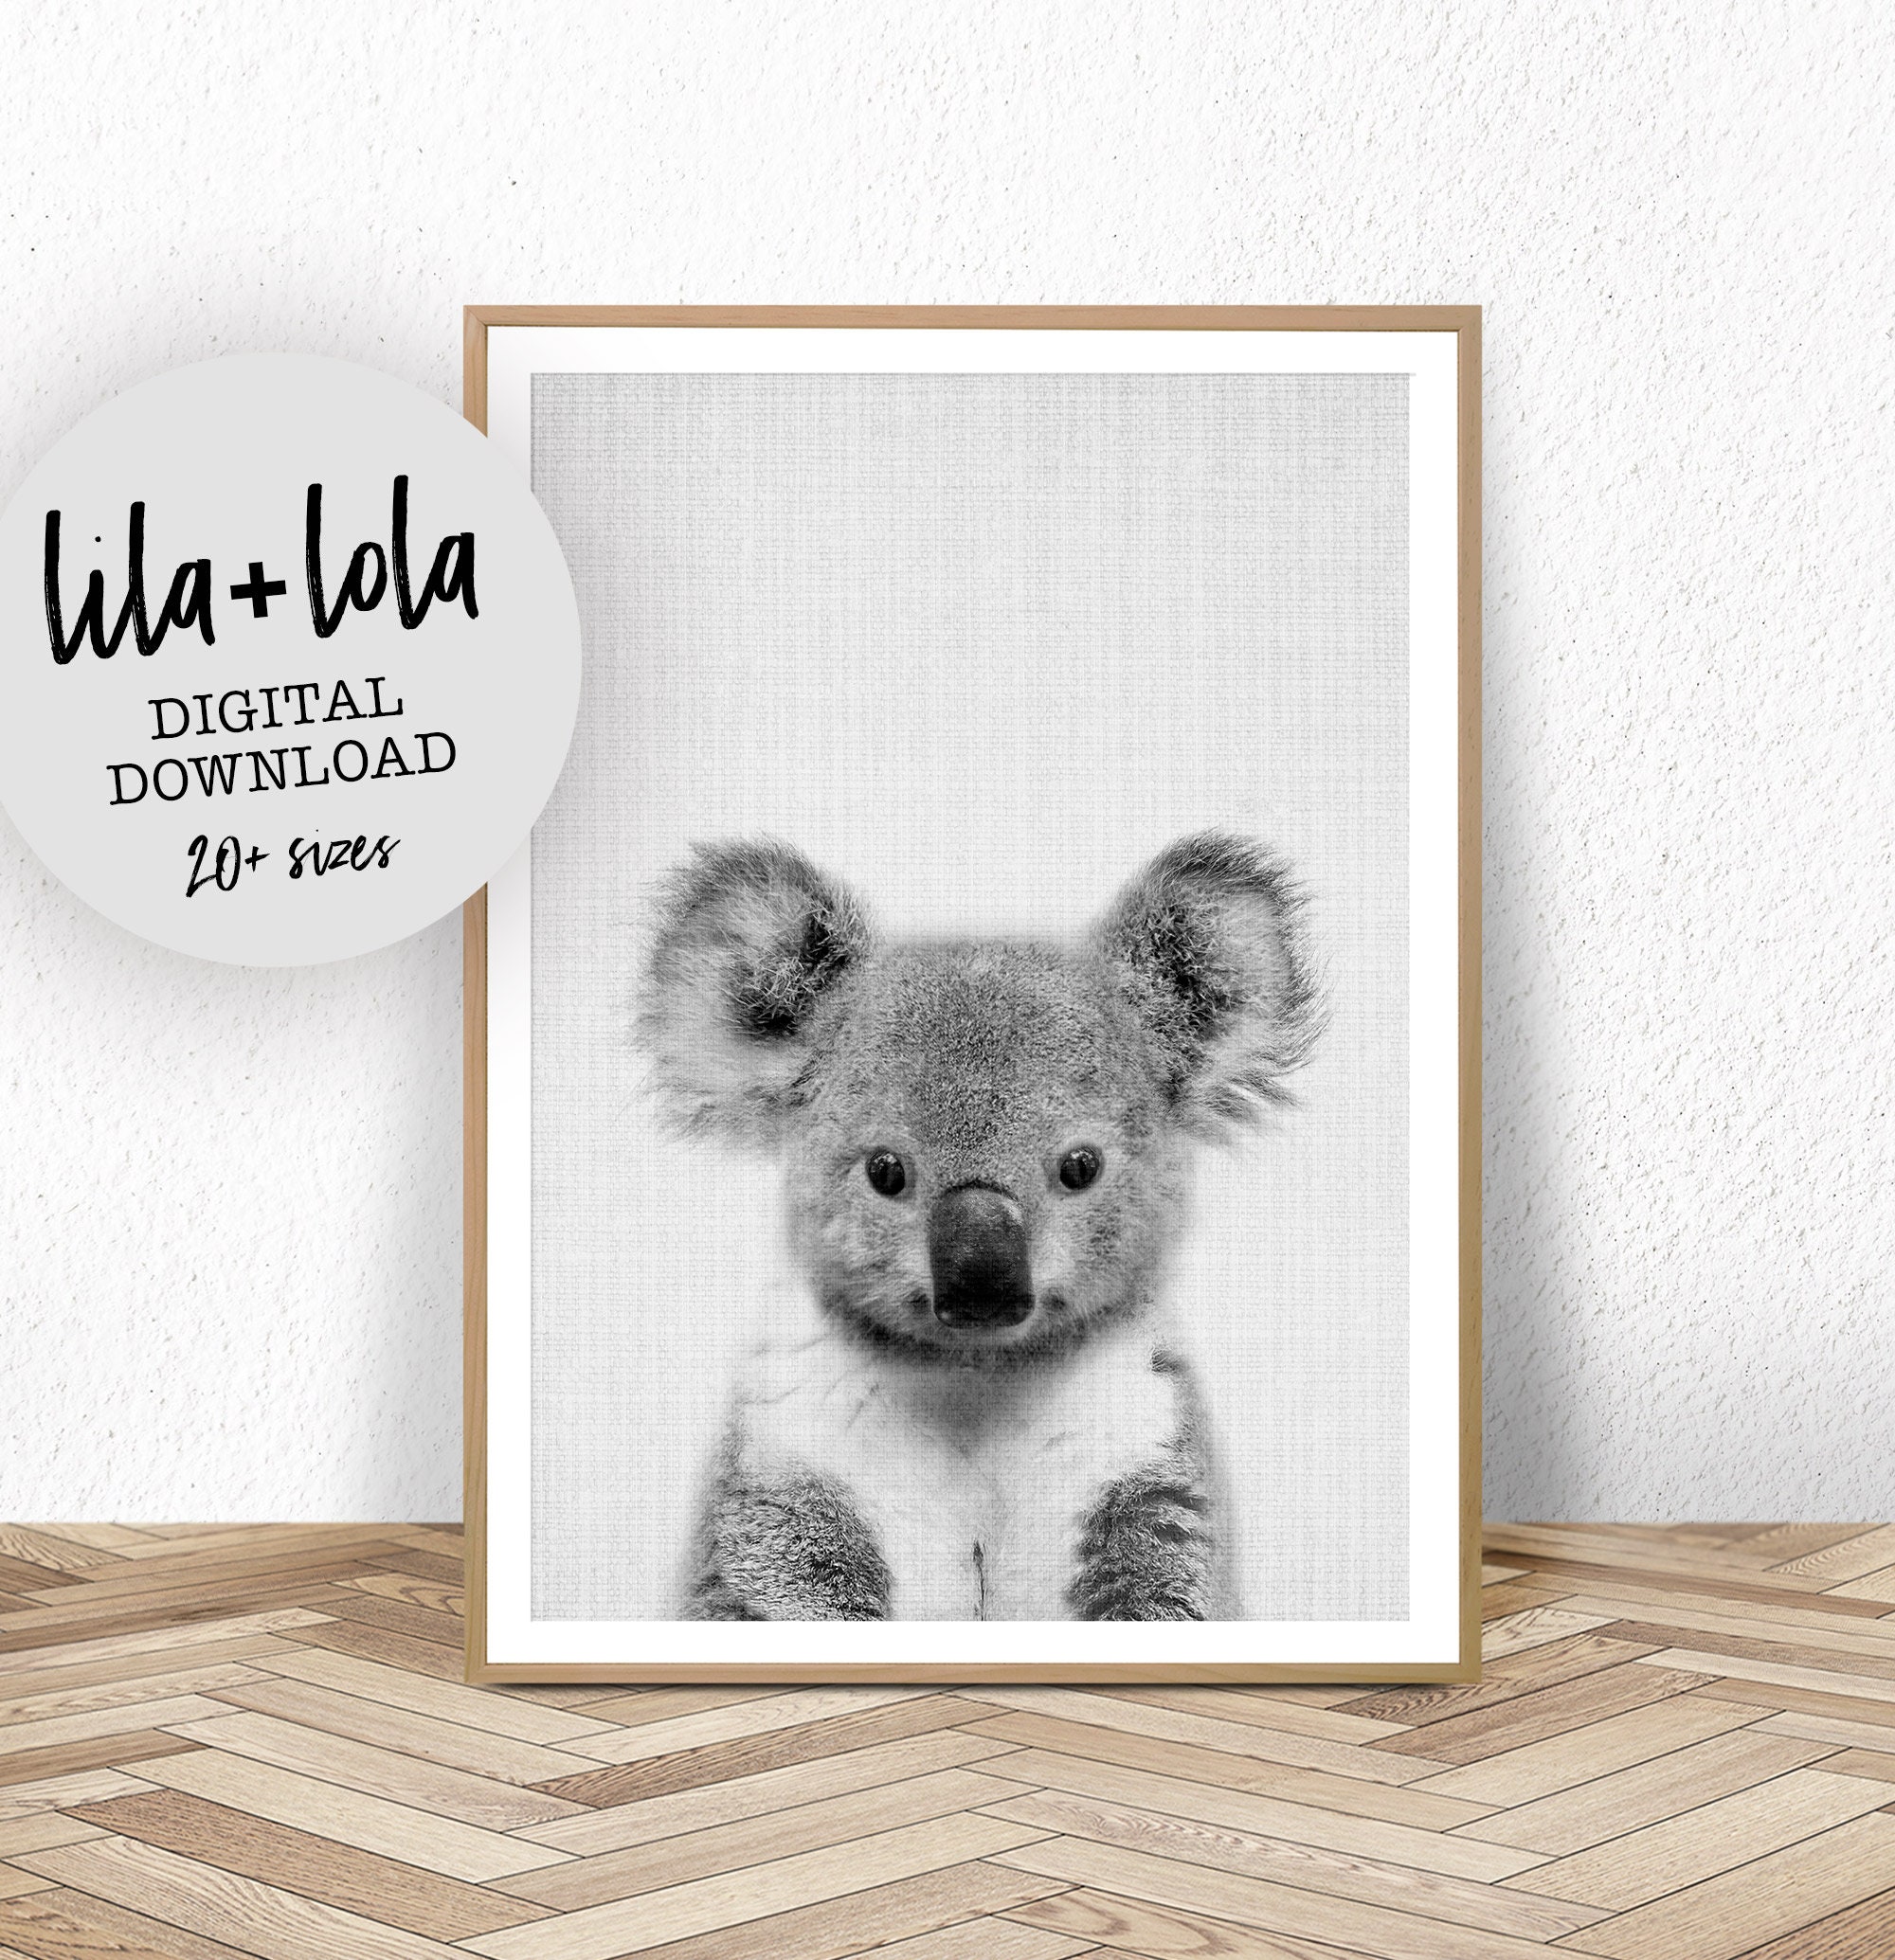 Nursery decor PRINTABLE art Nursery printables Nursery animals Koala print Animal prints Baby animals Australian Nursery wall art